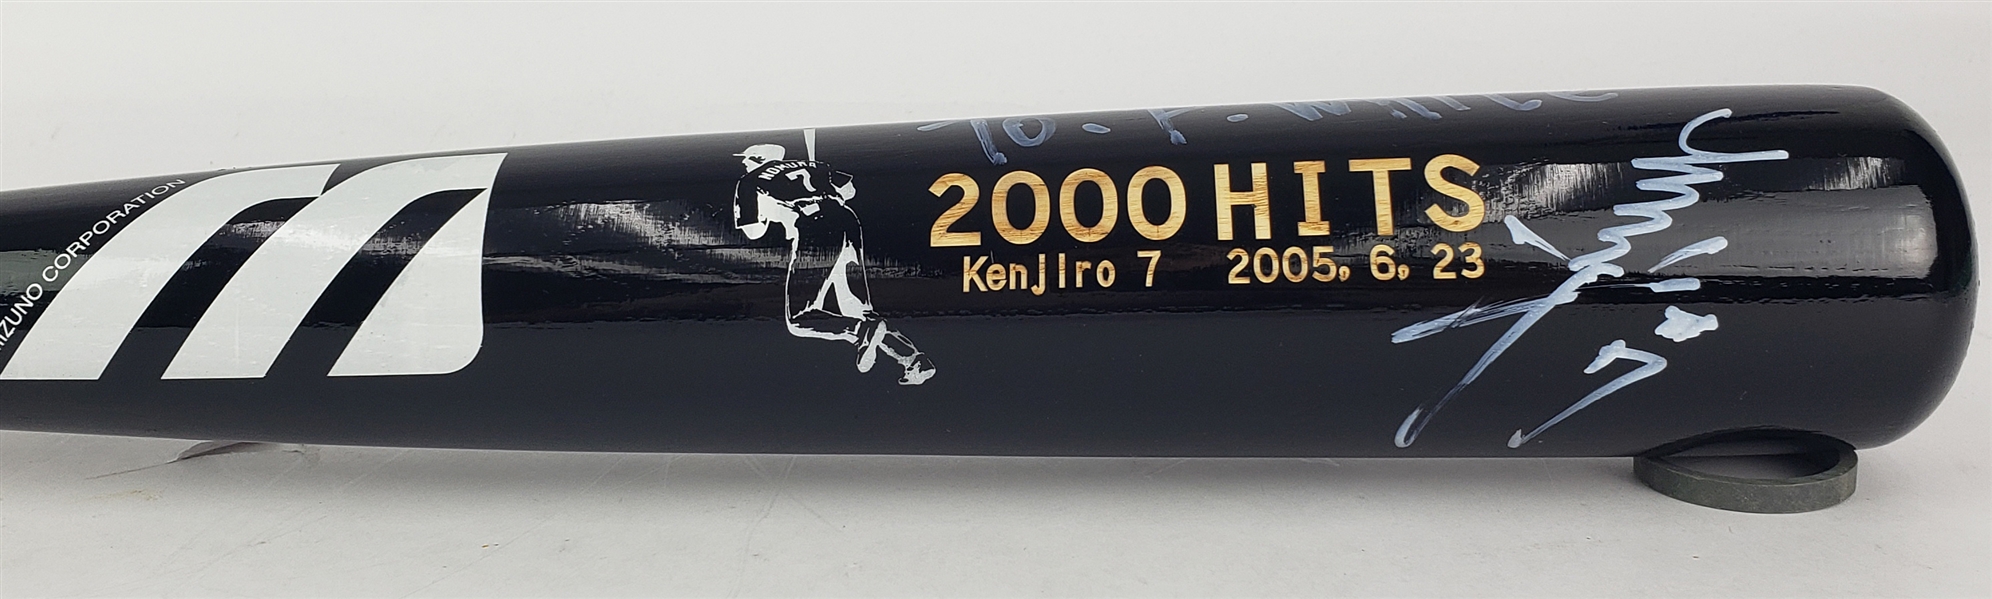 2005 Kenjiro Nomura Hiroshima Toyo Carp Signed Mizuno 2,000 Hits Commemorative Bat (JSA)